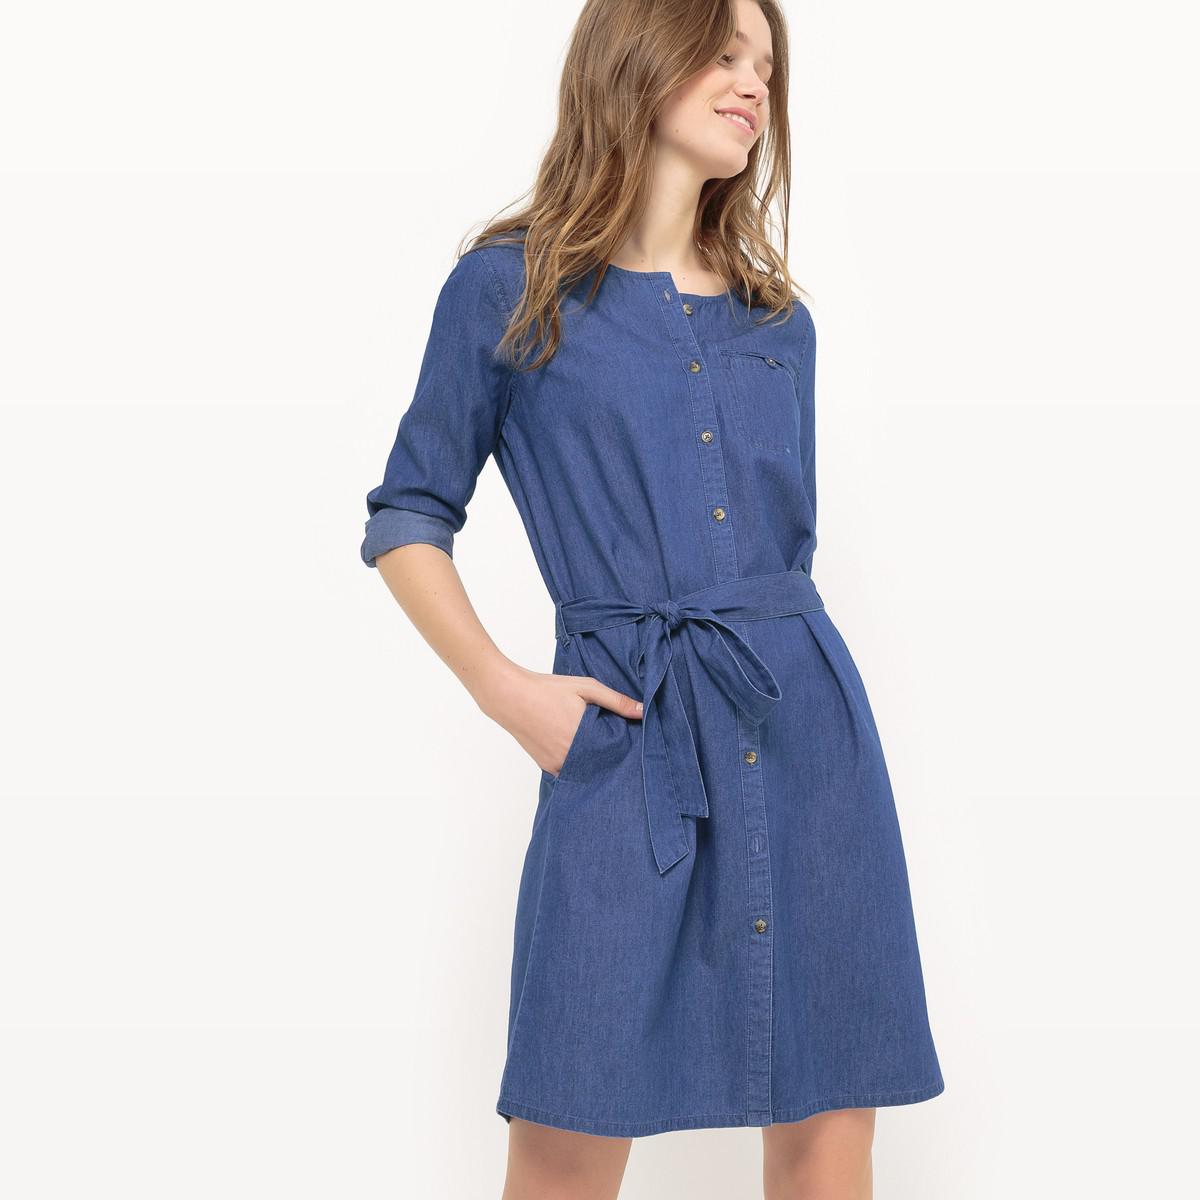 Lyst - La Redoute Soft Denim Shirt Dress in Blue